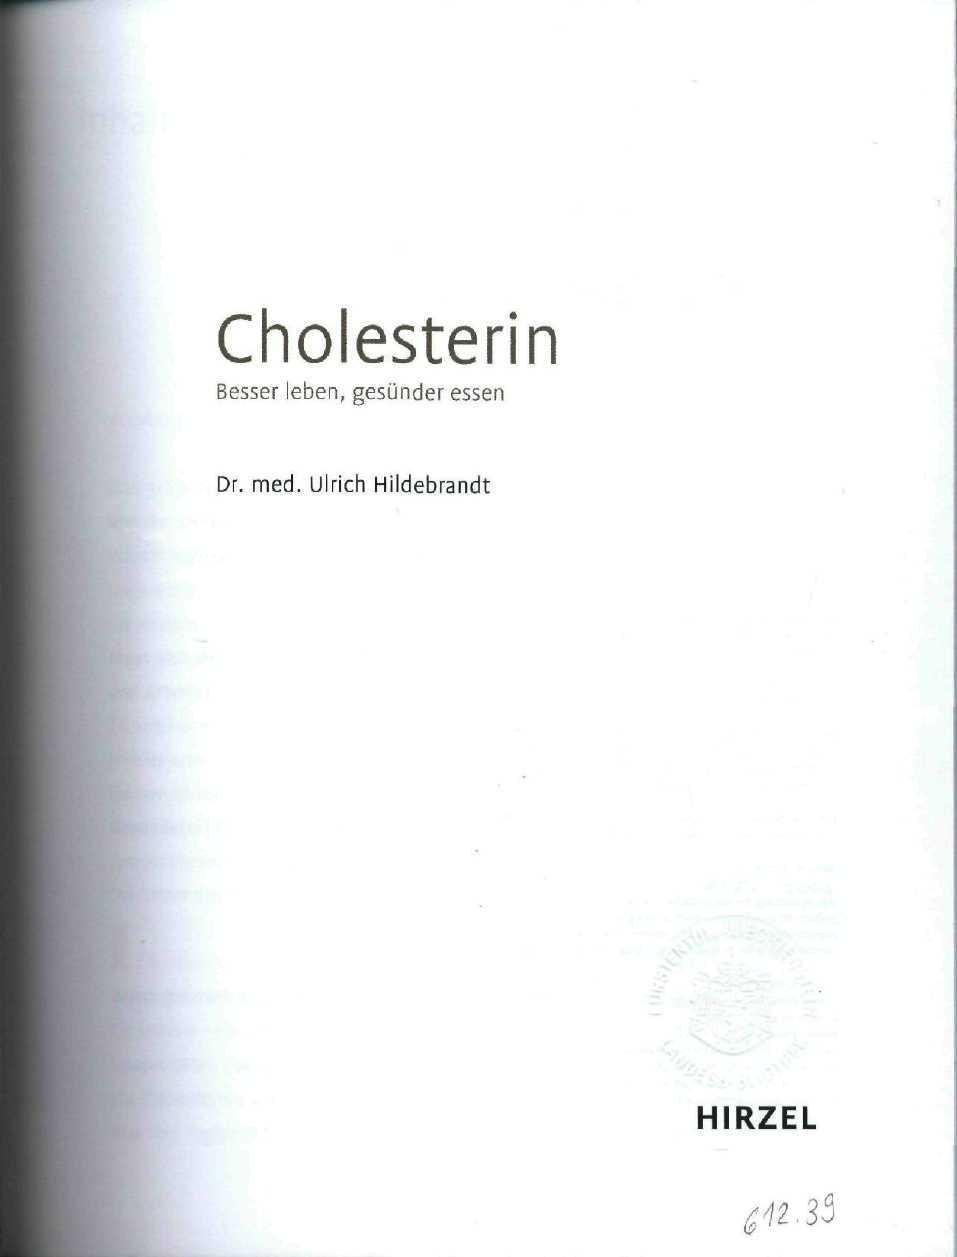 Cholesterin Besser leben, gesünder